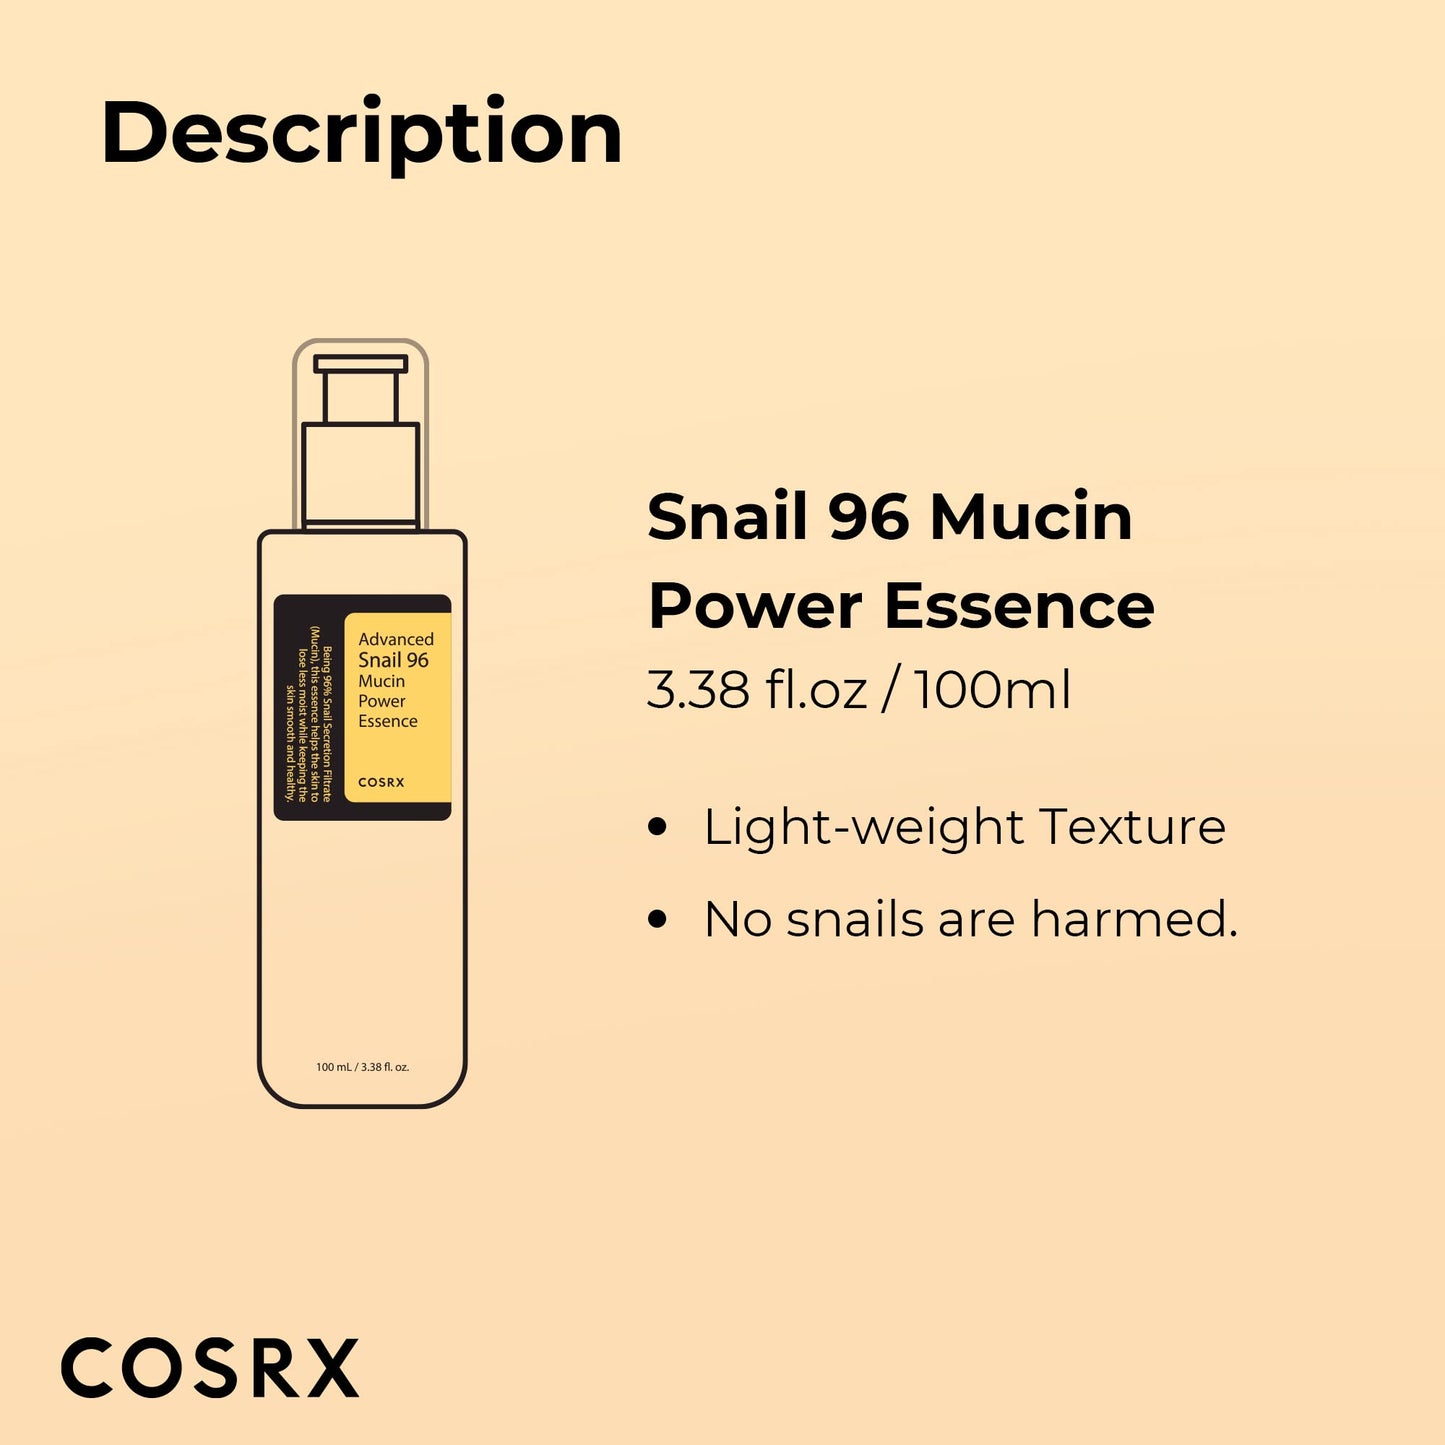 Description for COSRX Snail Mucin Essence (96%) - Hydrating Face Serum for Glowing Skin (100ml) - Korean Skincare, Dullness & Fine Lines